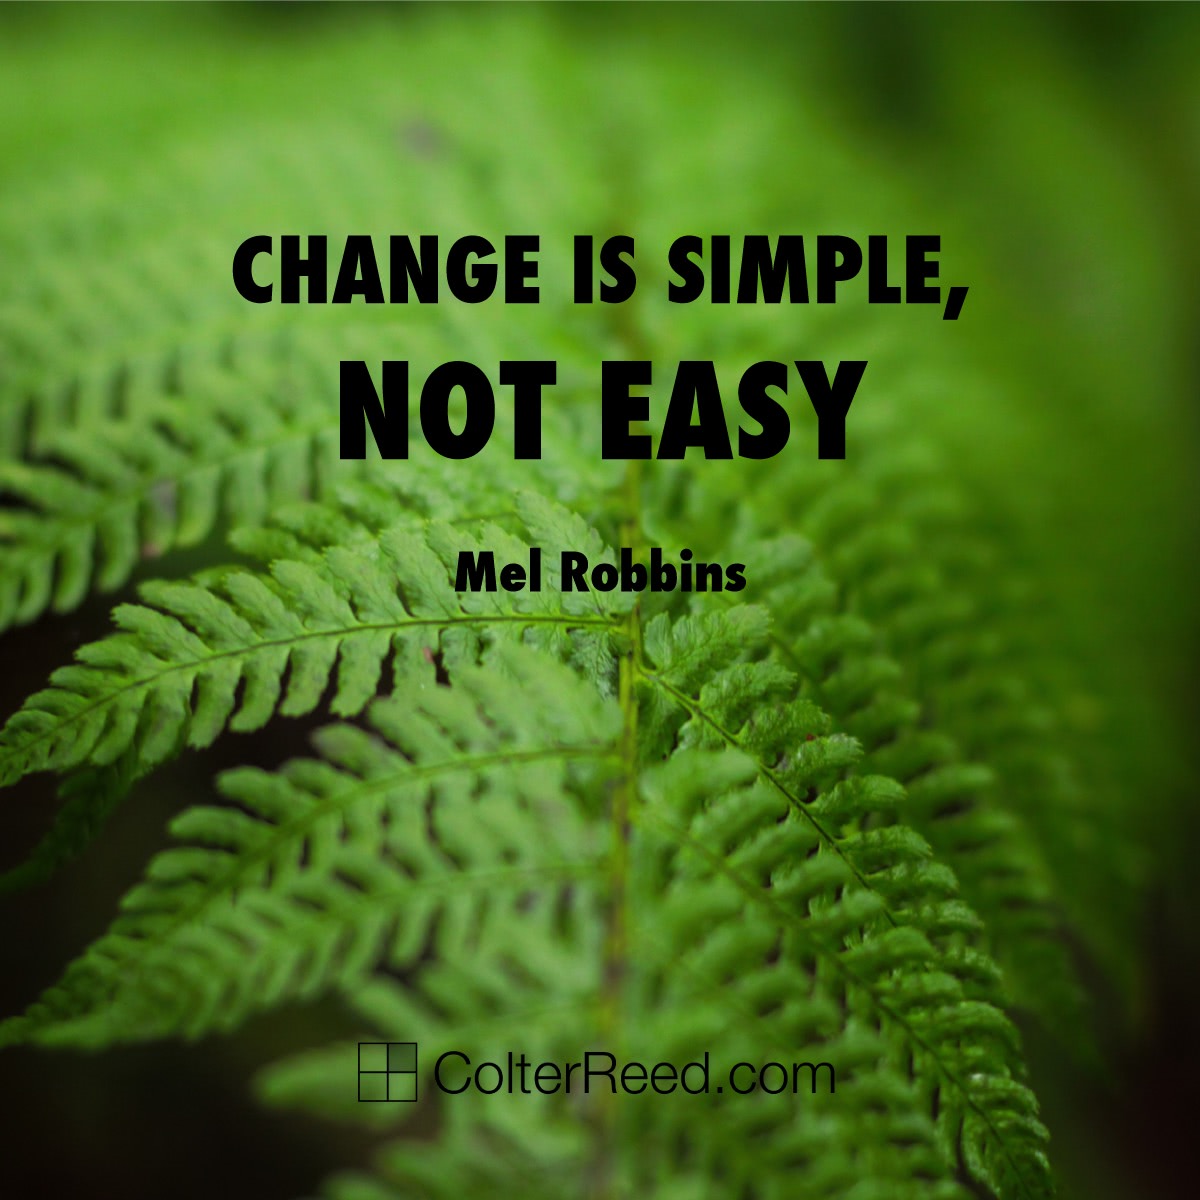 “Change is simple, not easy.” —Mel Robbins